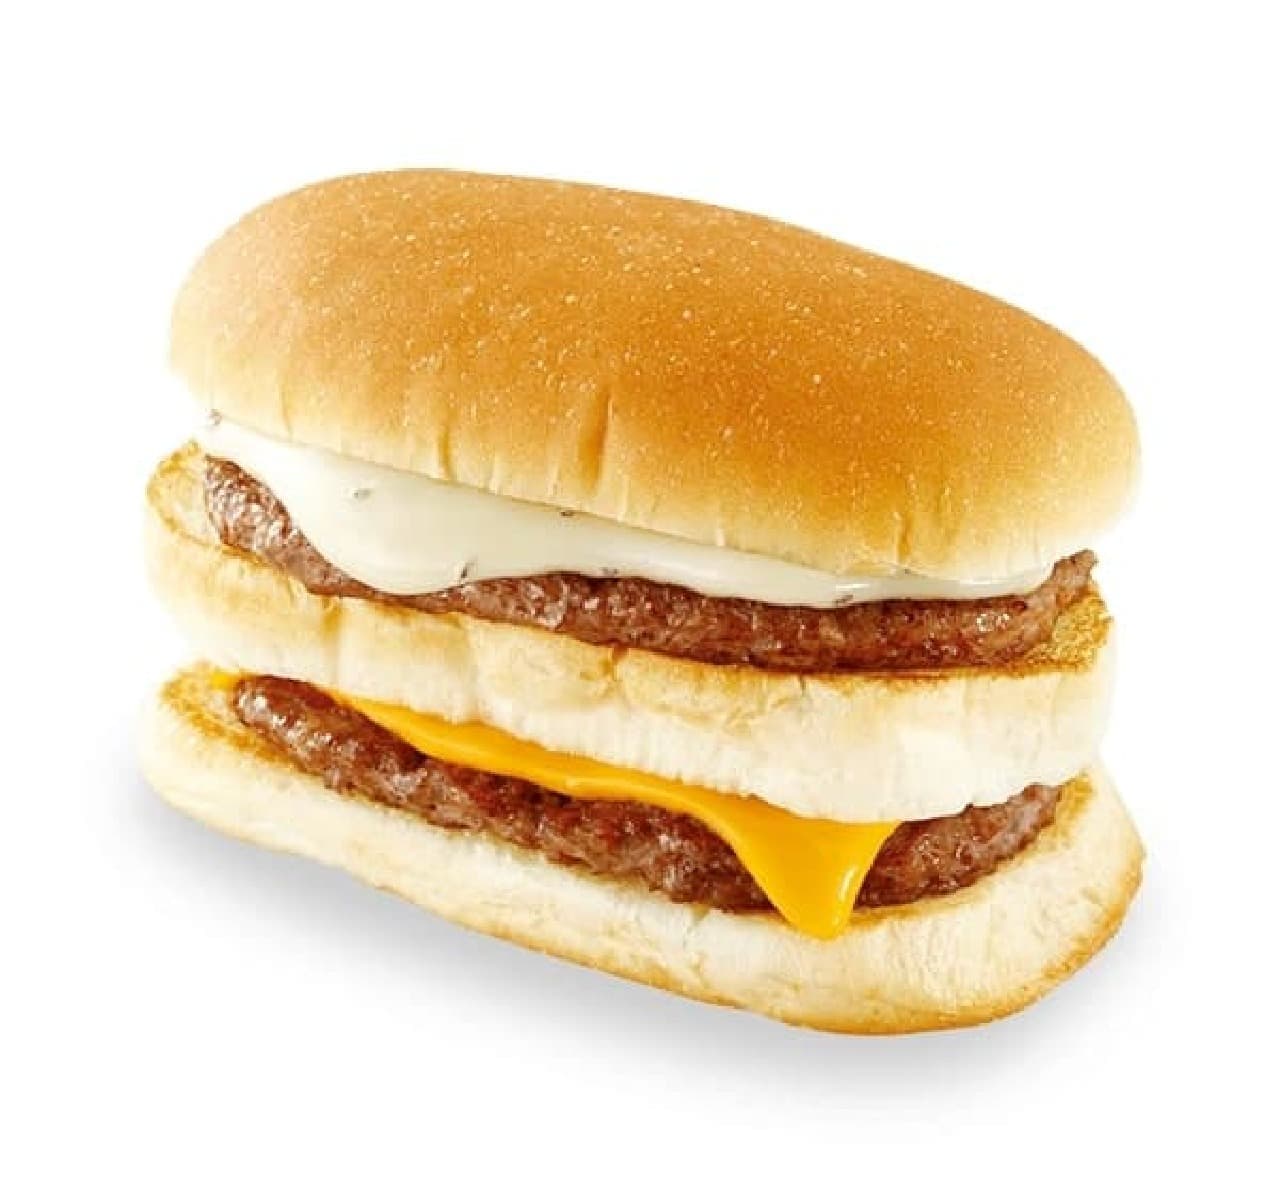 Zetteria "Excellent Grand Cheeseburger".